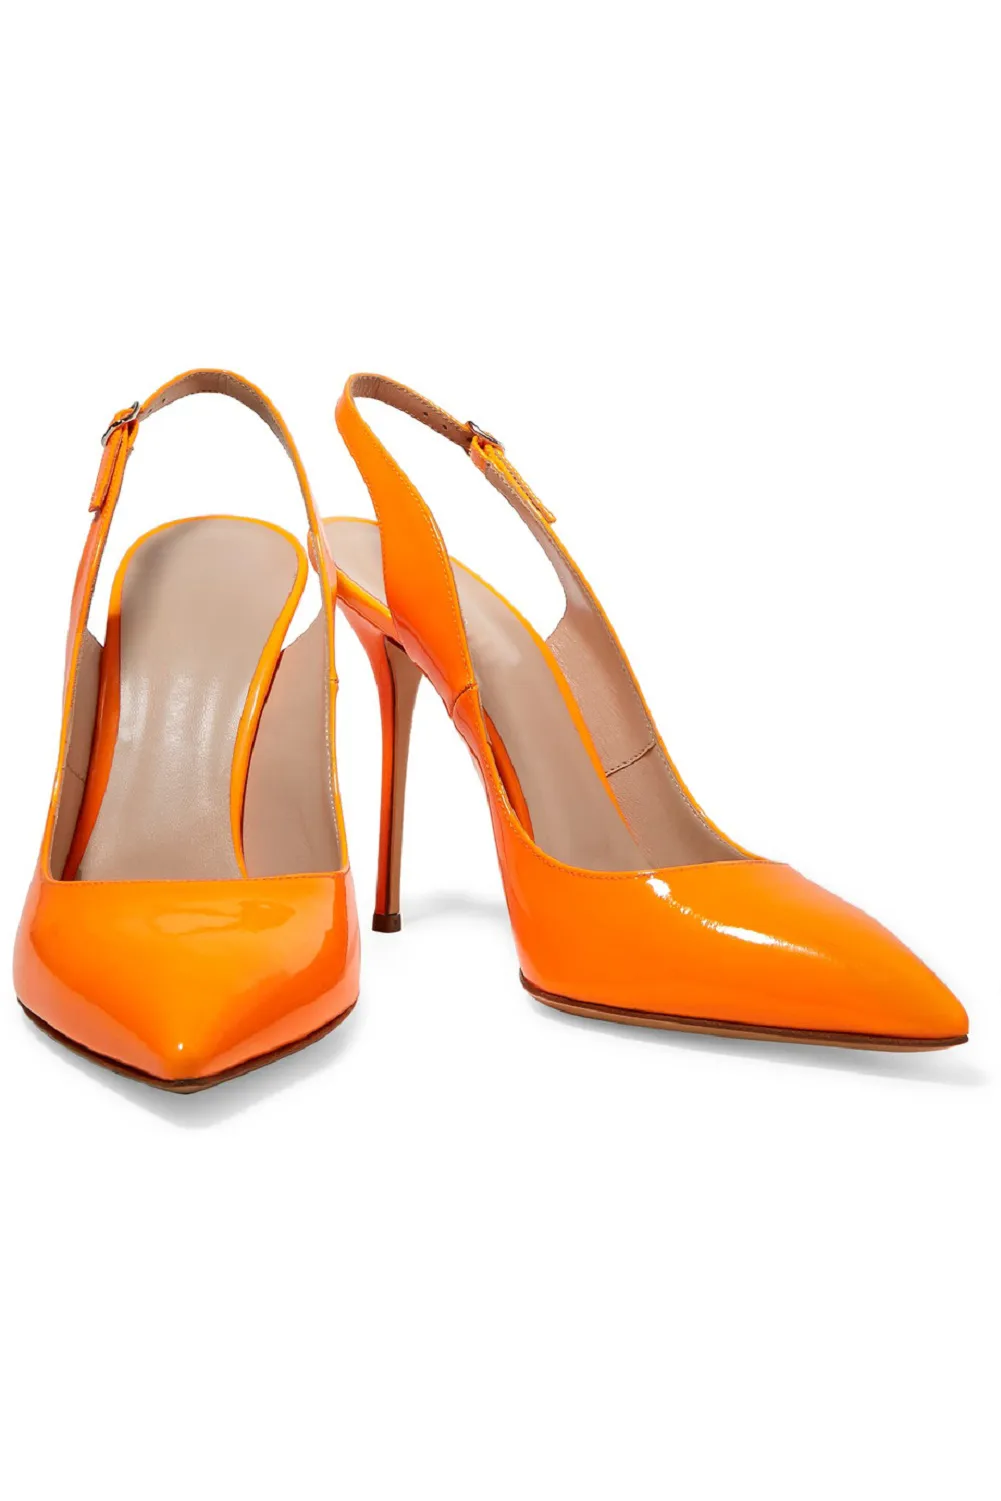 Zandina 새로운 도착 여자 손수 만든 특허 가죽 신발 Slingback 뾰족 높은 뒤꿈치 패션 파티 파티 프롬 펌프 오렌지